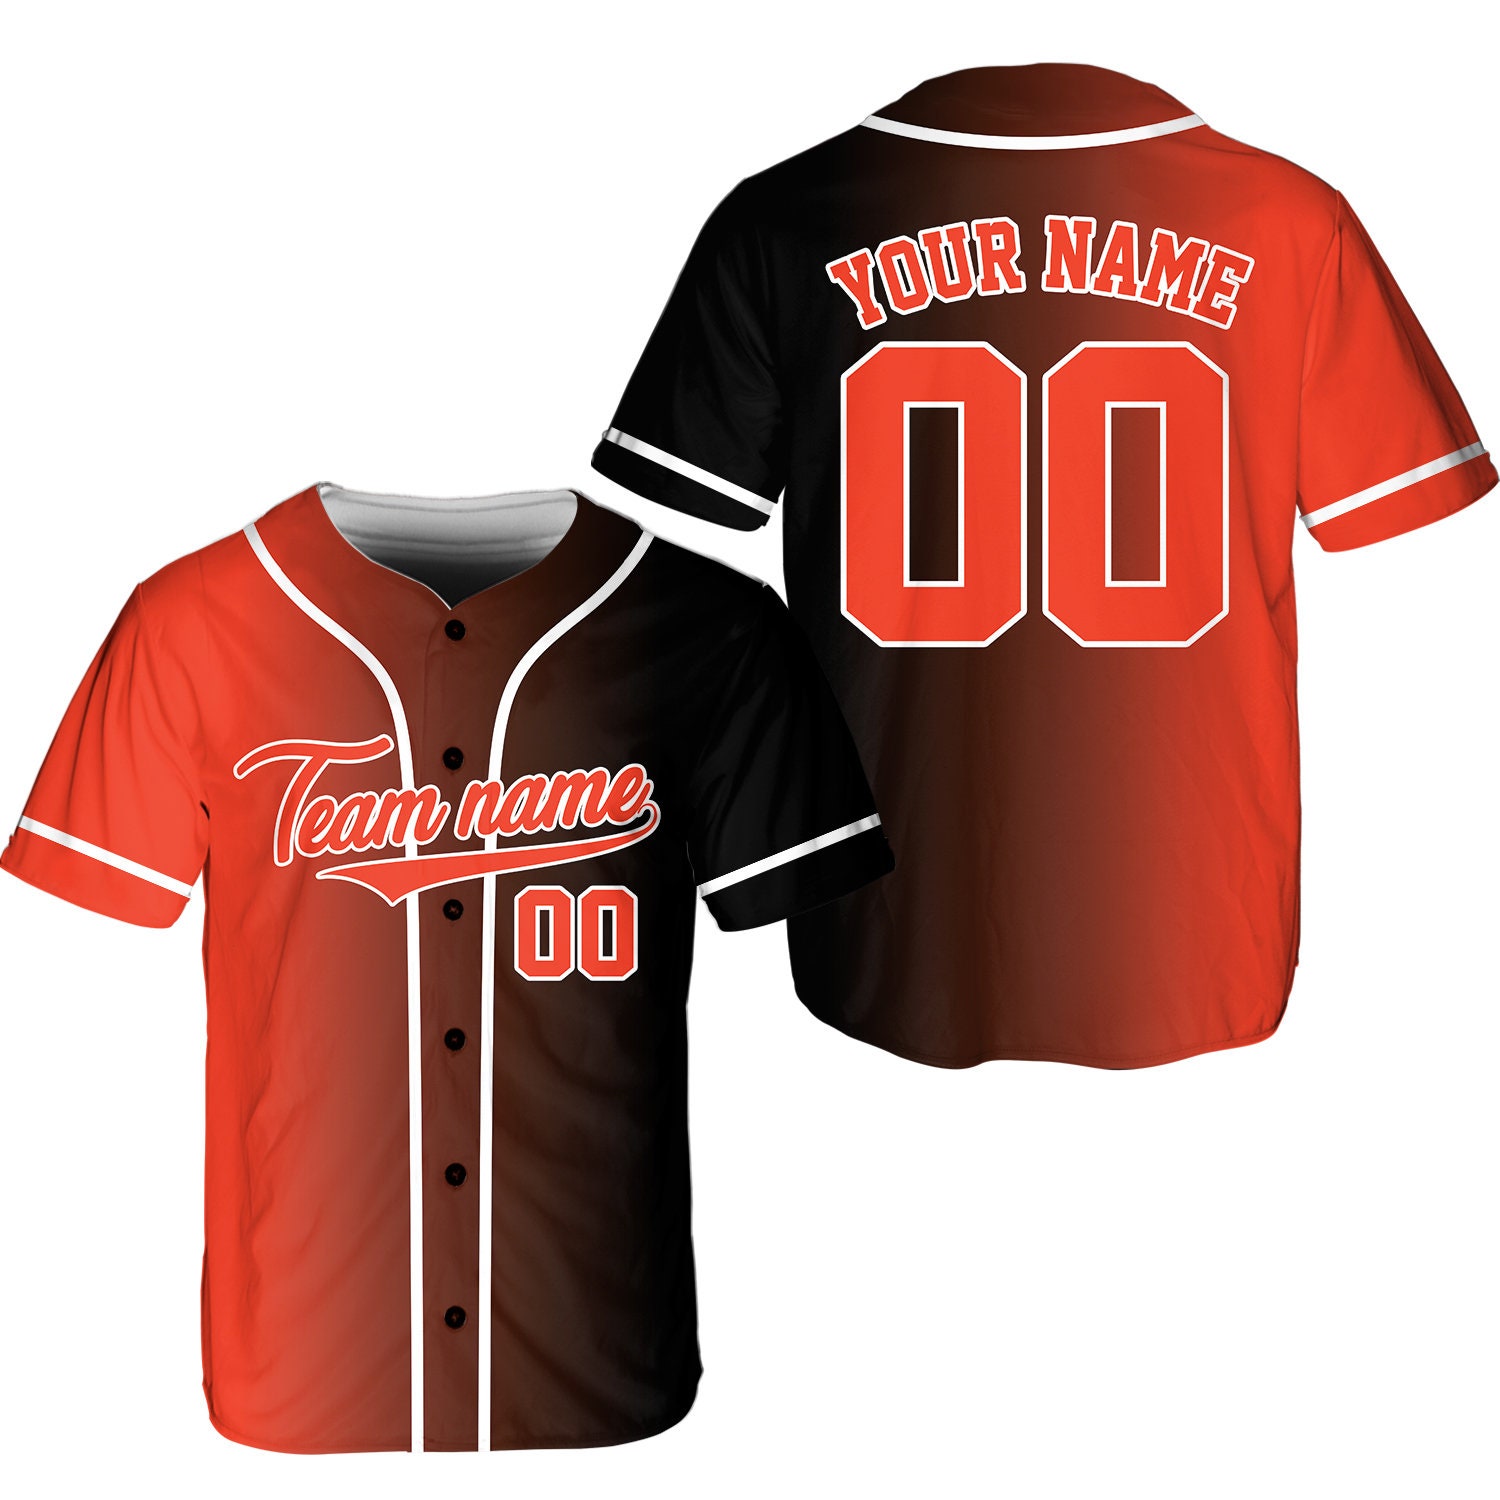 Basic Baseball Jersey, Custom Team Name And Number Baseball Jersey